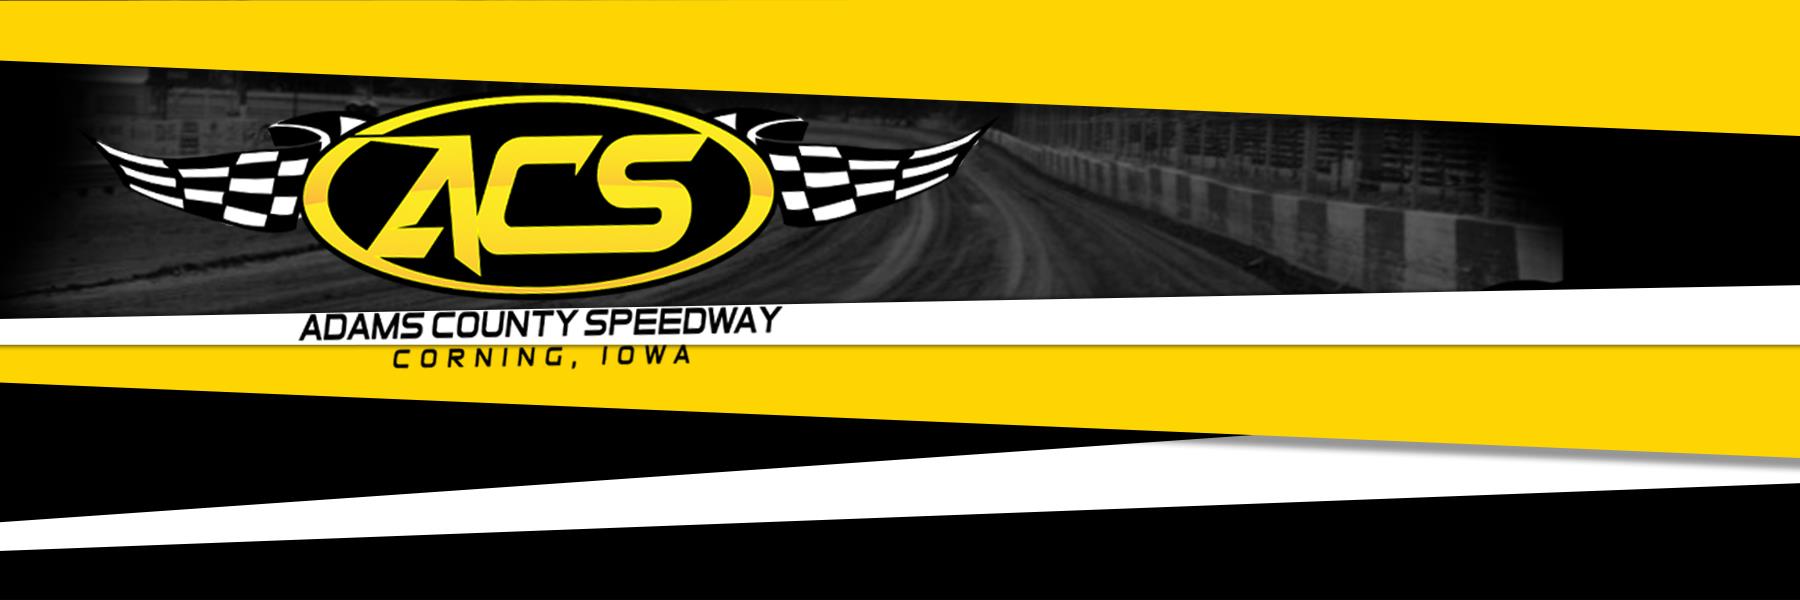 6/4/2022 - Adams County Speedway